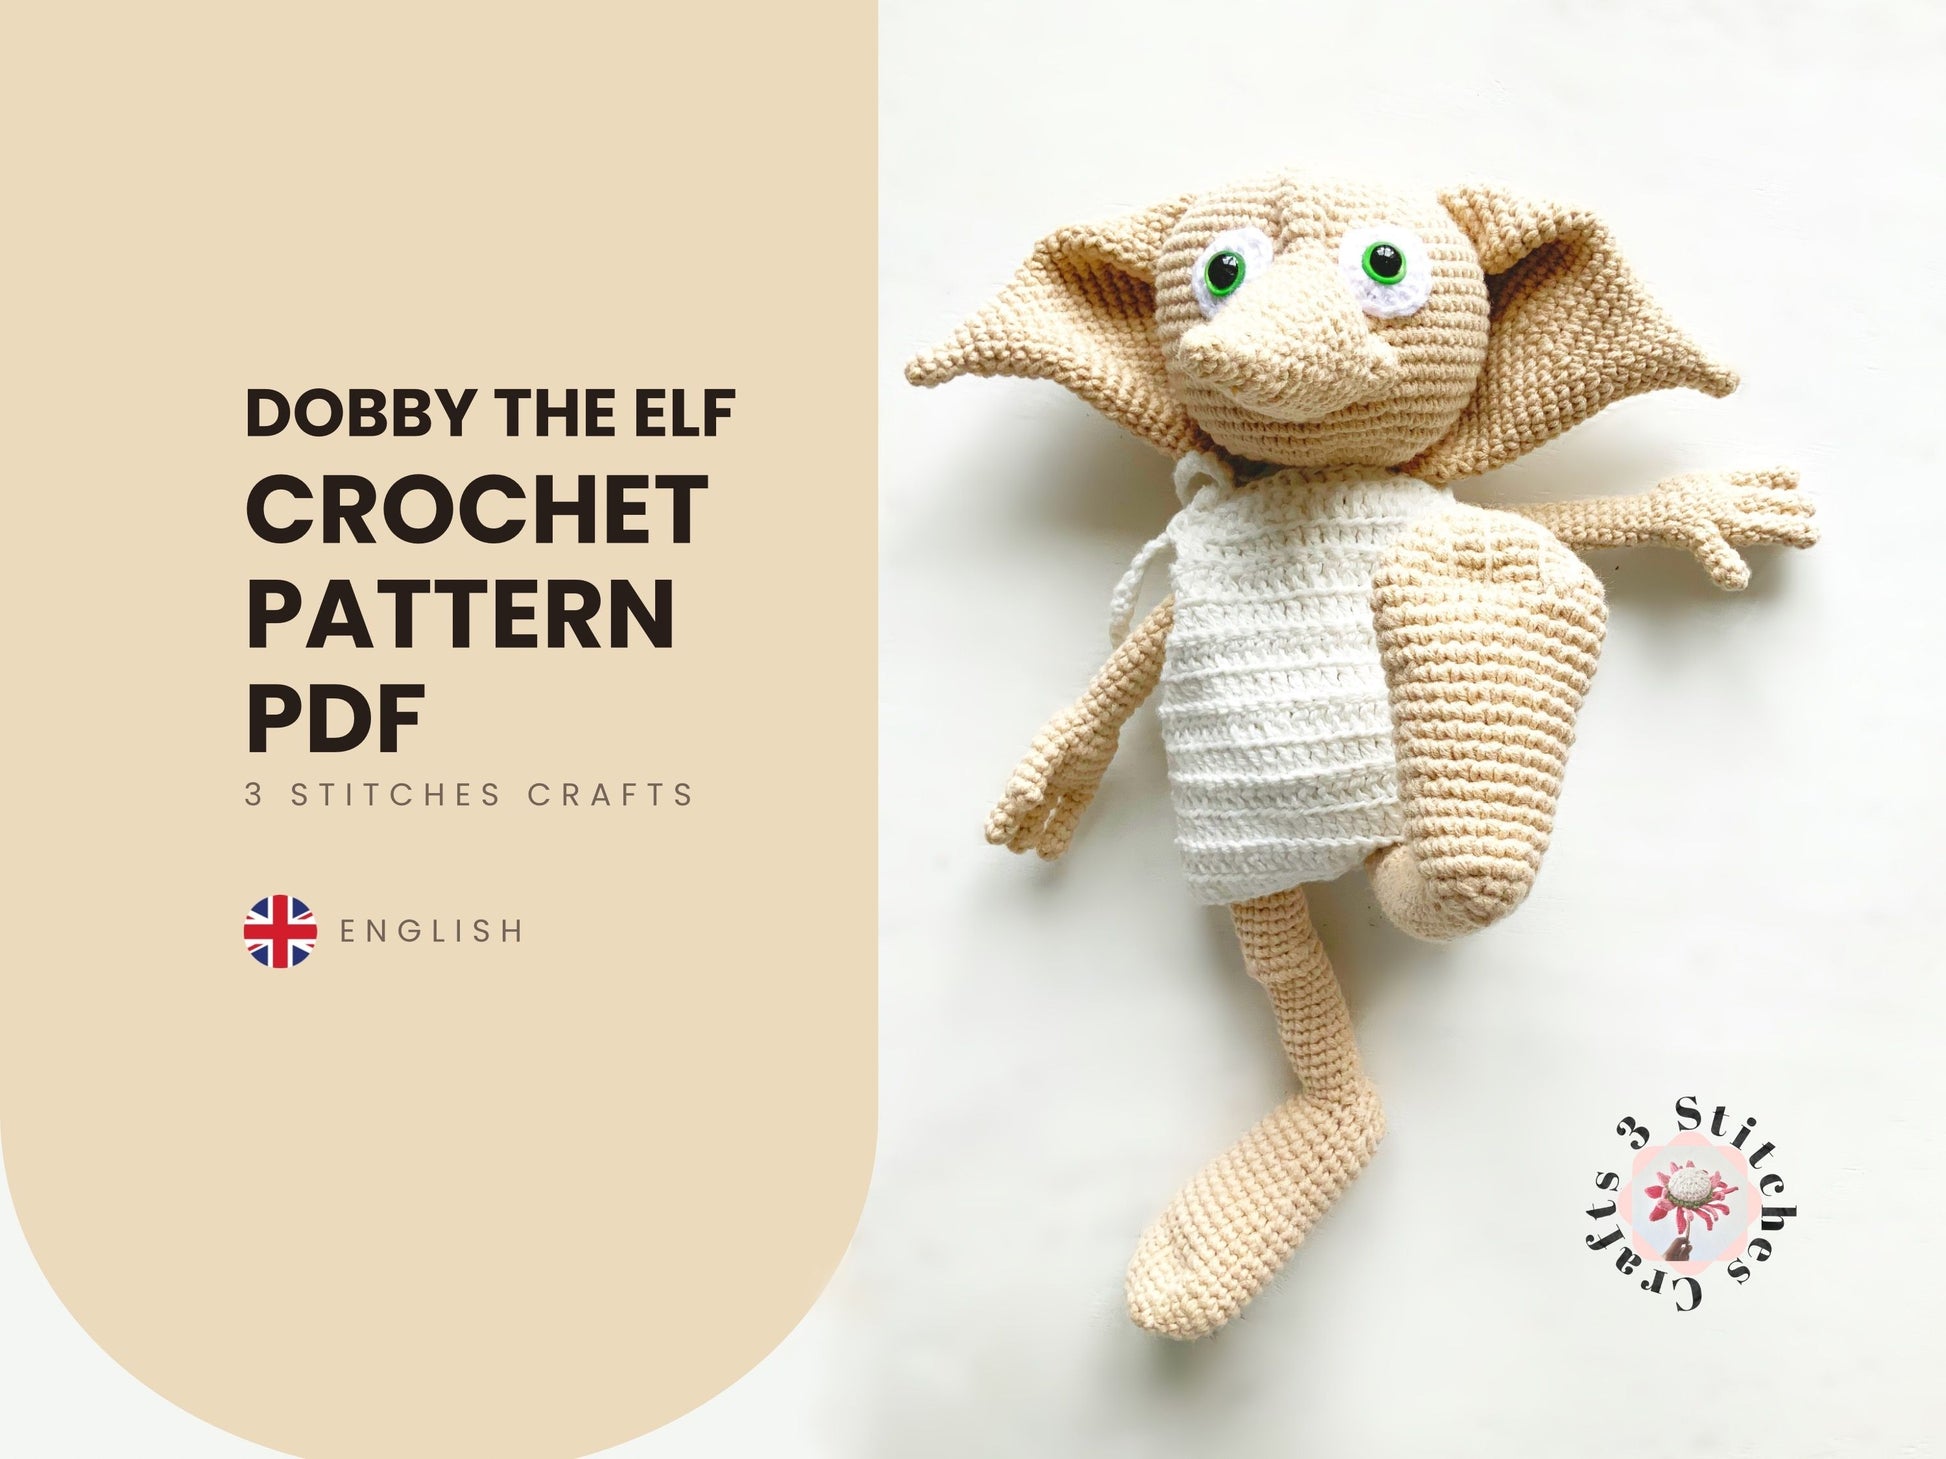 Harry Potter Crochet Series, How to Crochet Harry Potter Amigurumi Pattern